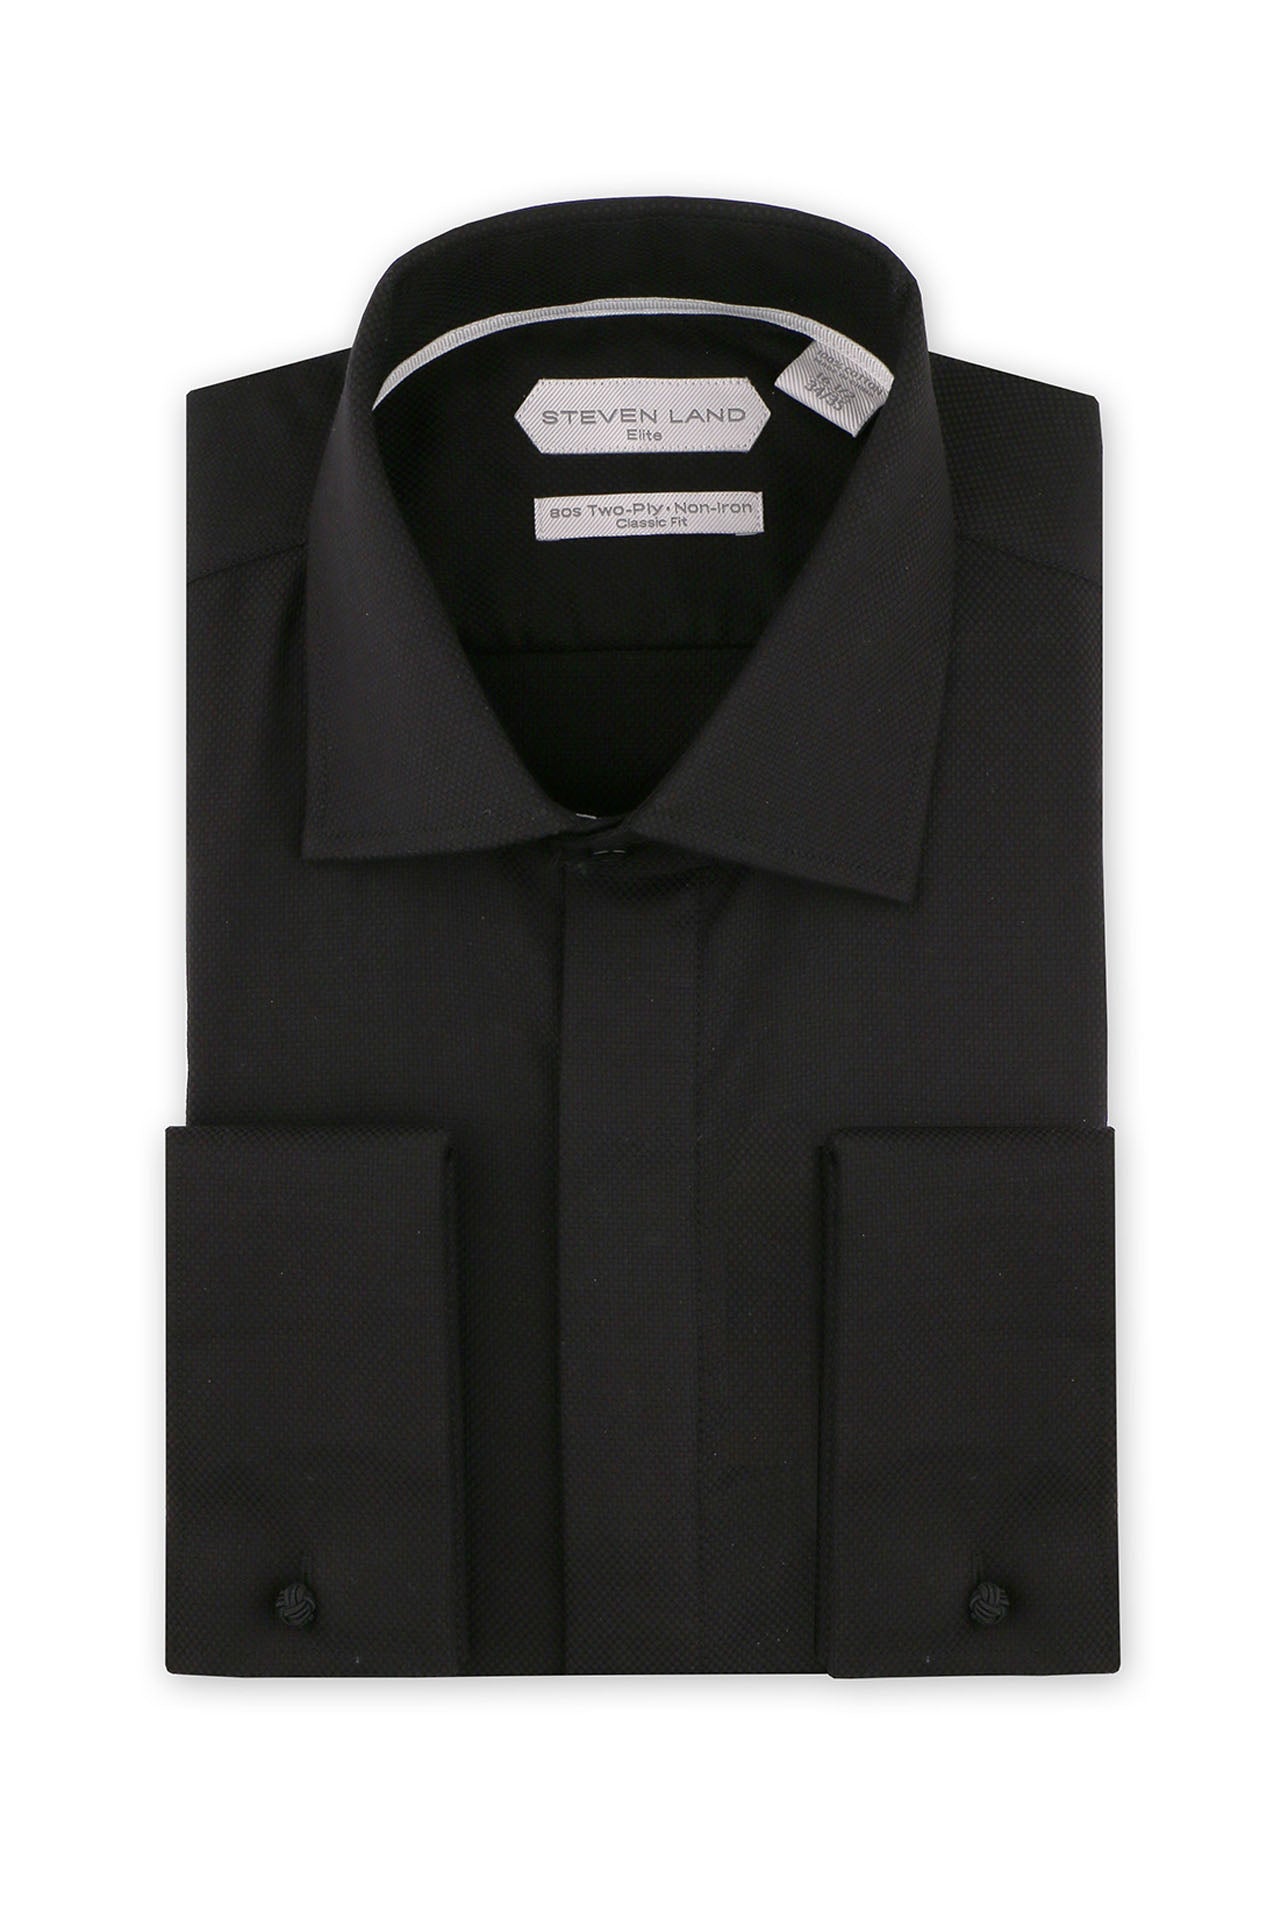 Steven Land | Ceremony Textured Shirt | Black – Steven Land Fashion